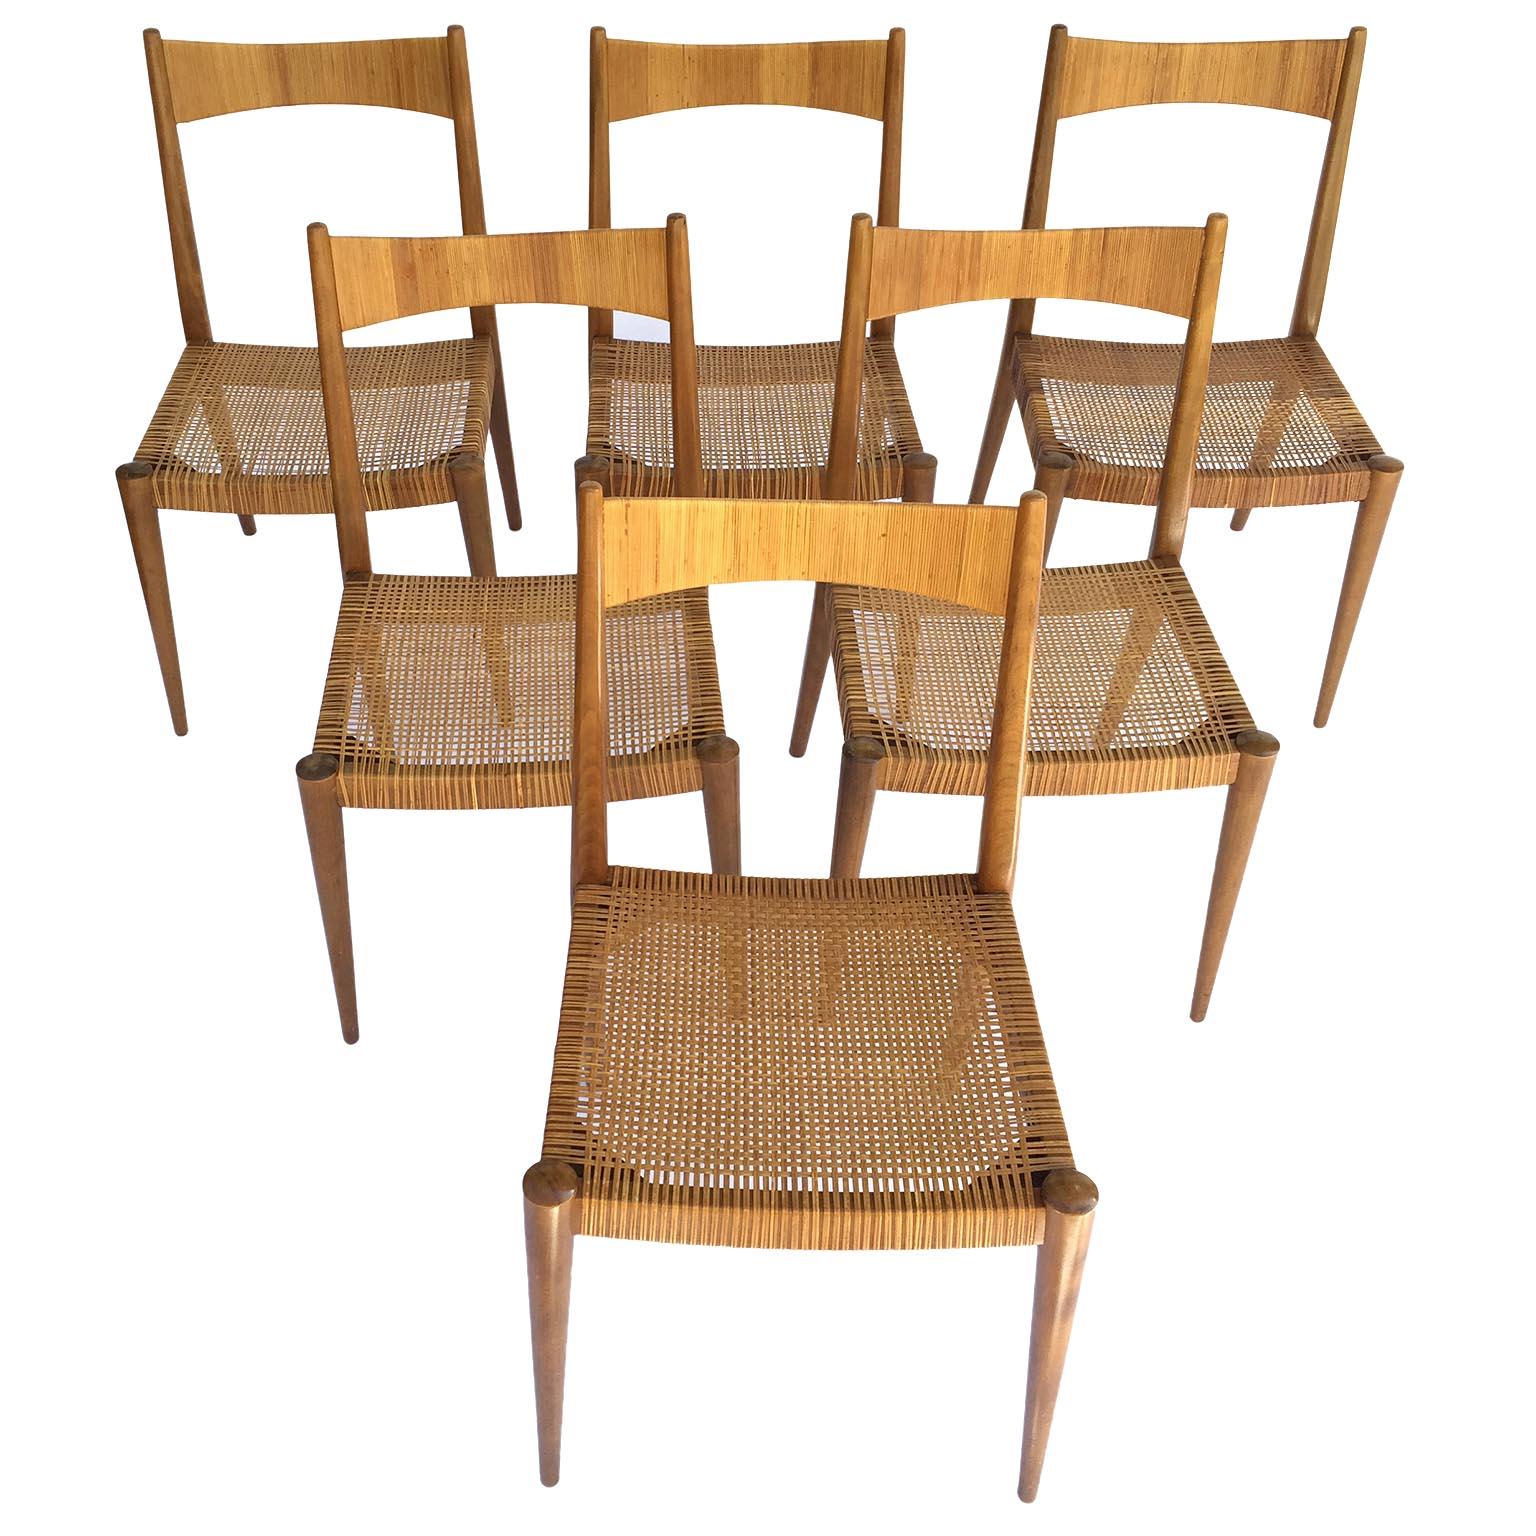 Mid-Century Modern Six Anna-Lülja Praun Chairs, Wood Cane Wicker, 1950s